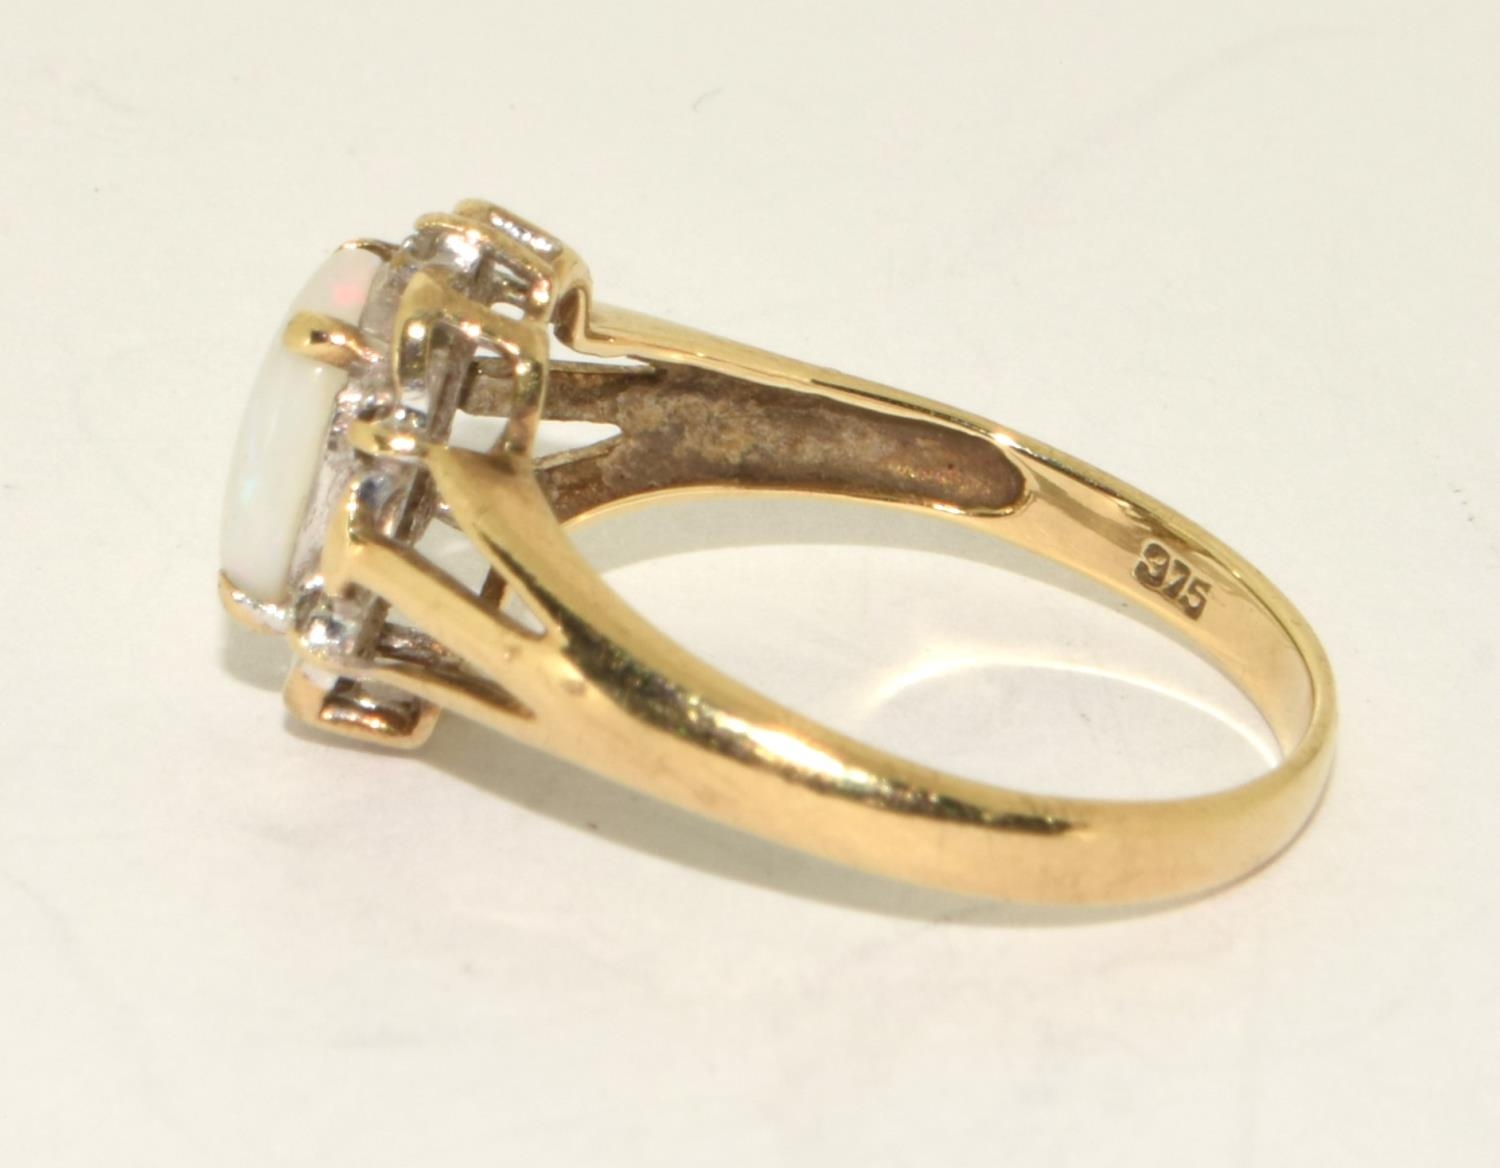 Vintage 9ct gold natural Opal ring size L - Image 2 of 5